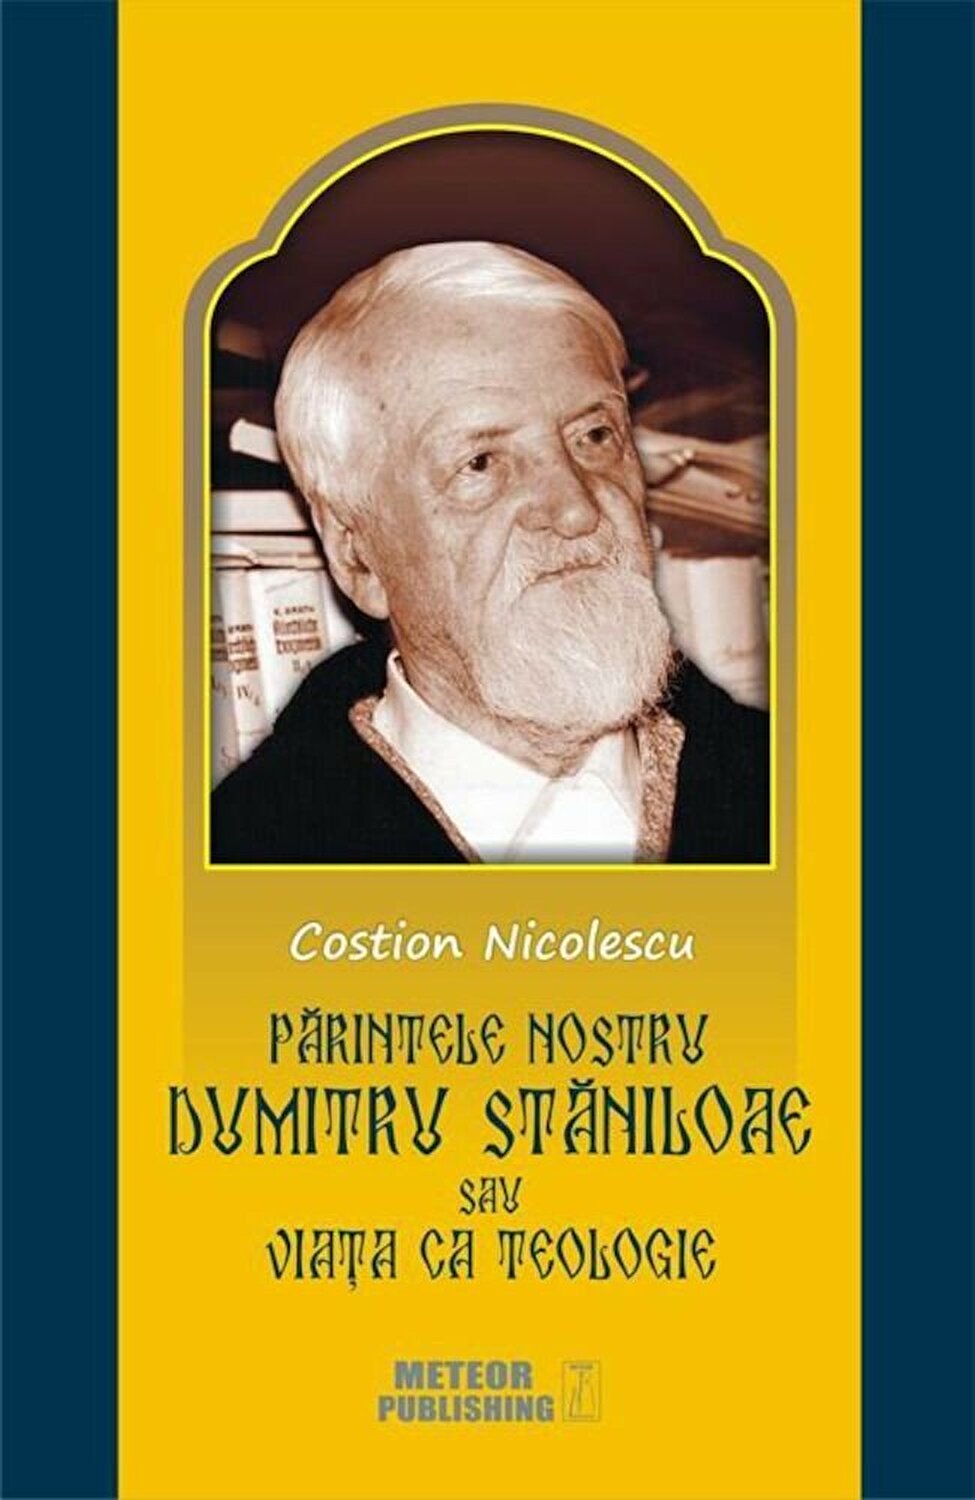 Parintele nostru Dumitru Staniloae sau viata ca teologie | Costion Nicolescu